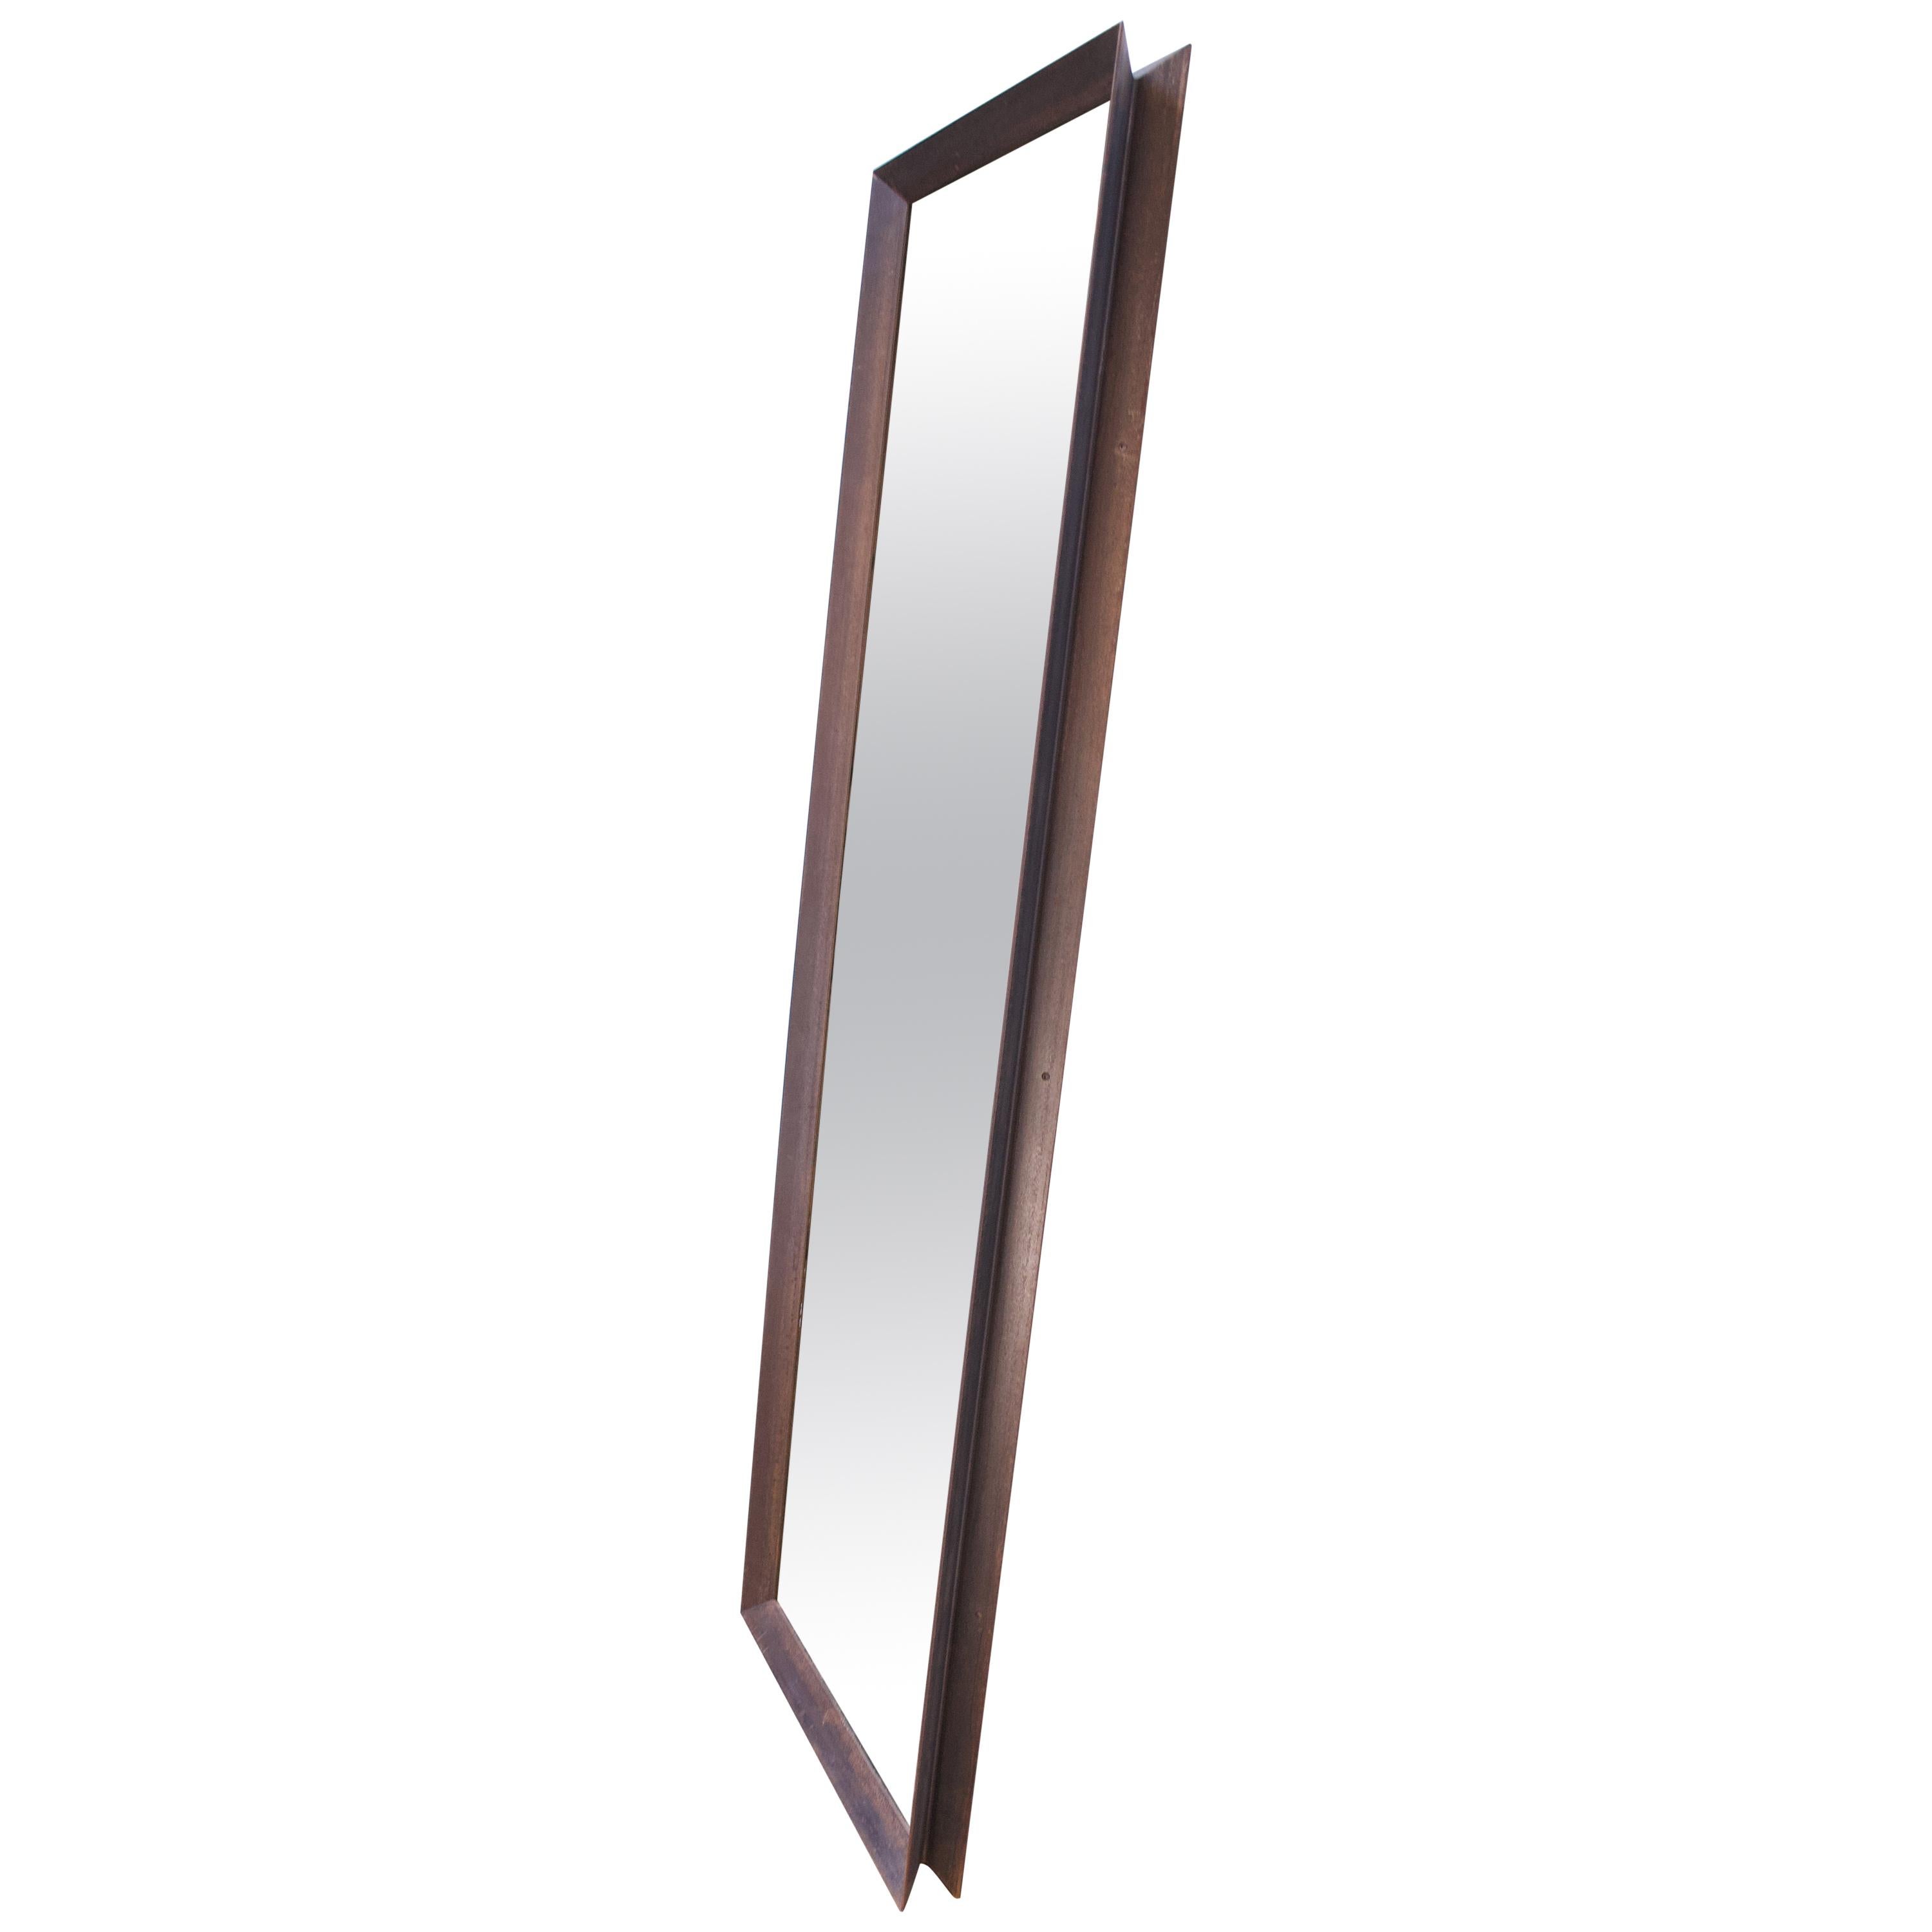 Contemporary Industrial Blackened Steel Floor Mirror